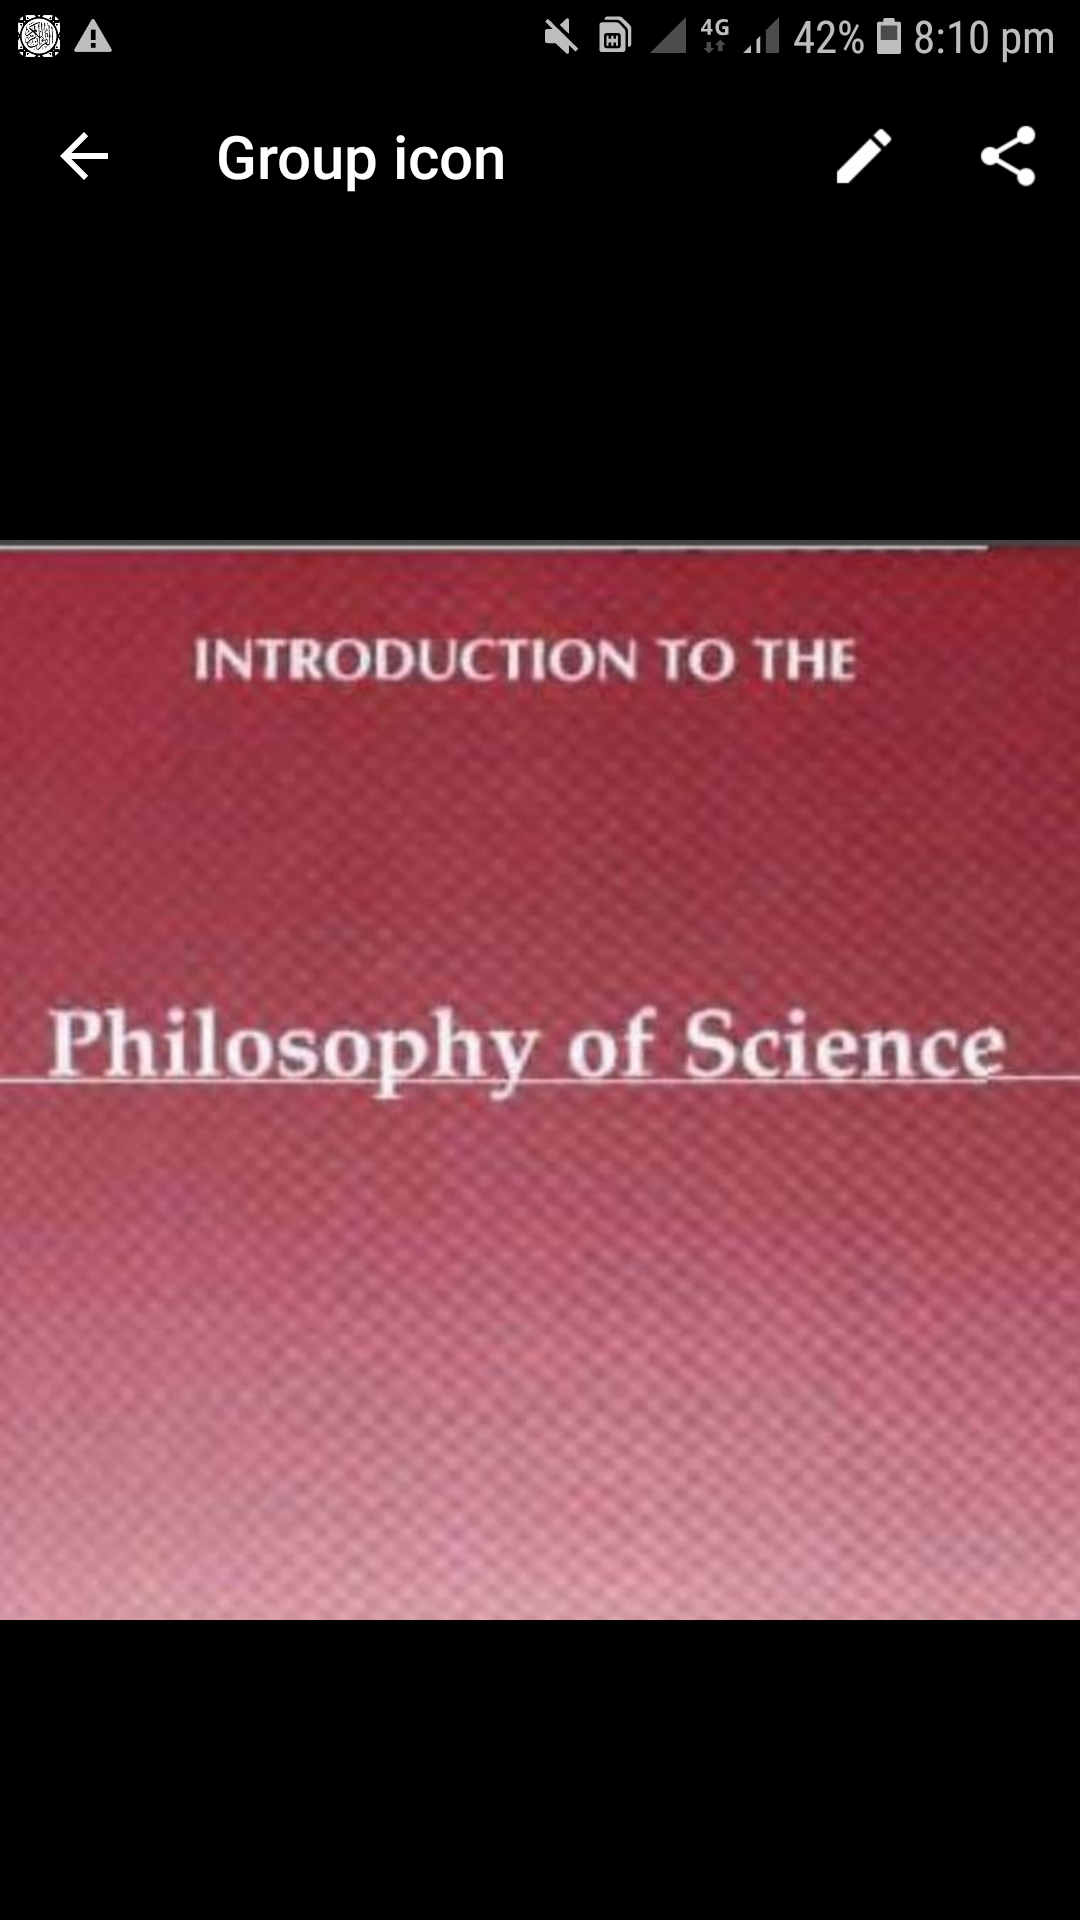 Philosophy of science